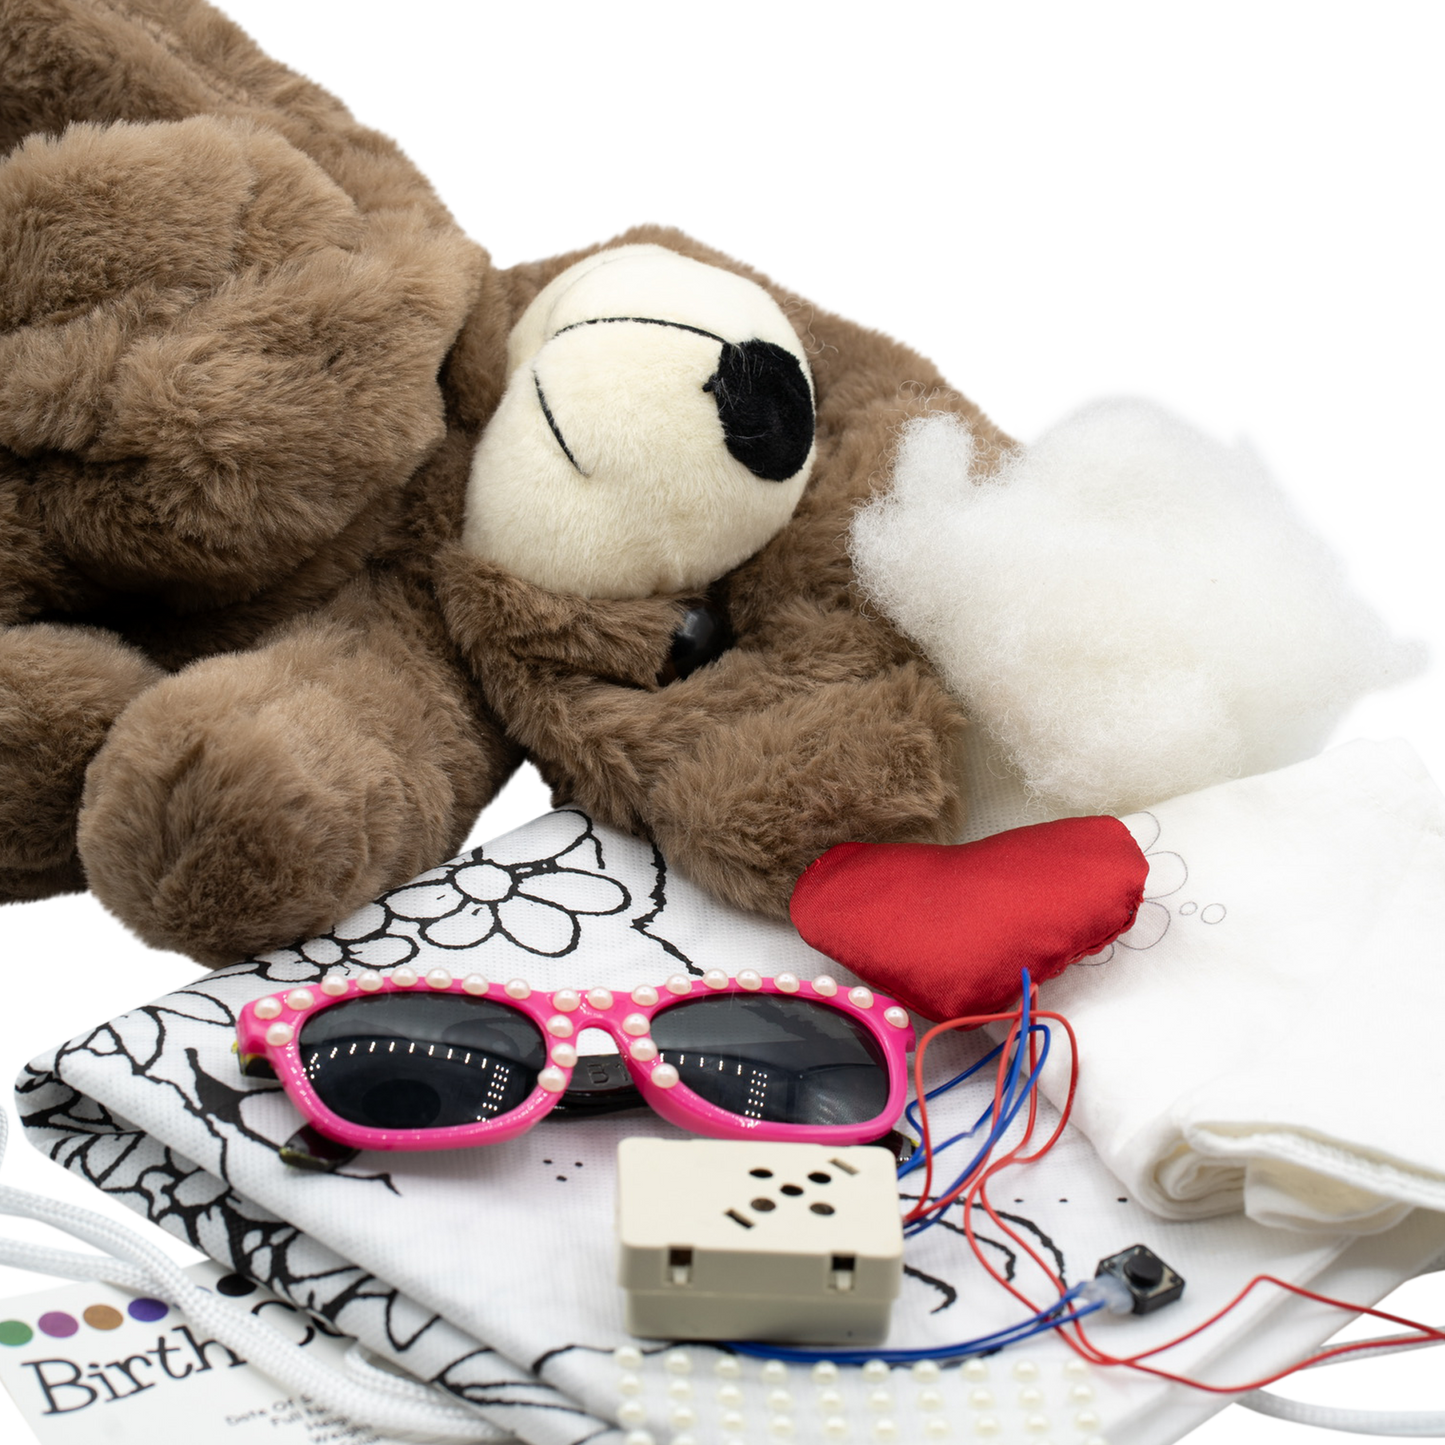 Build a Teddy Bear plus accessories Kit